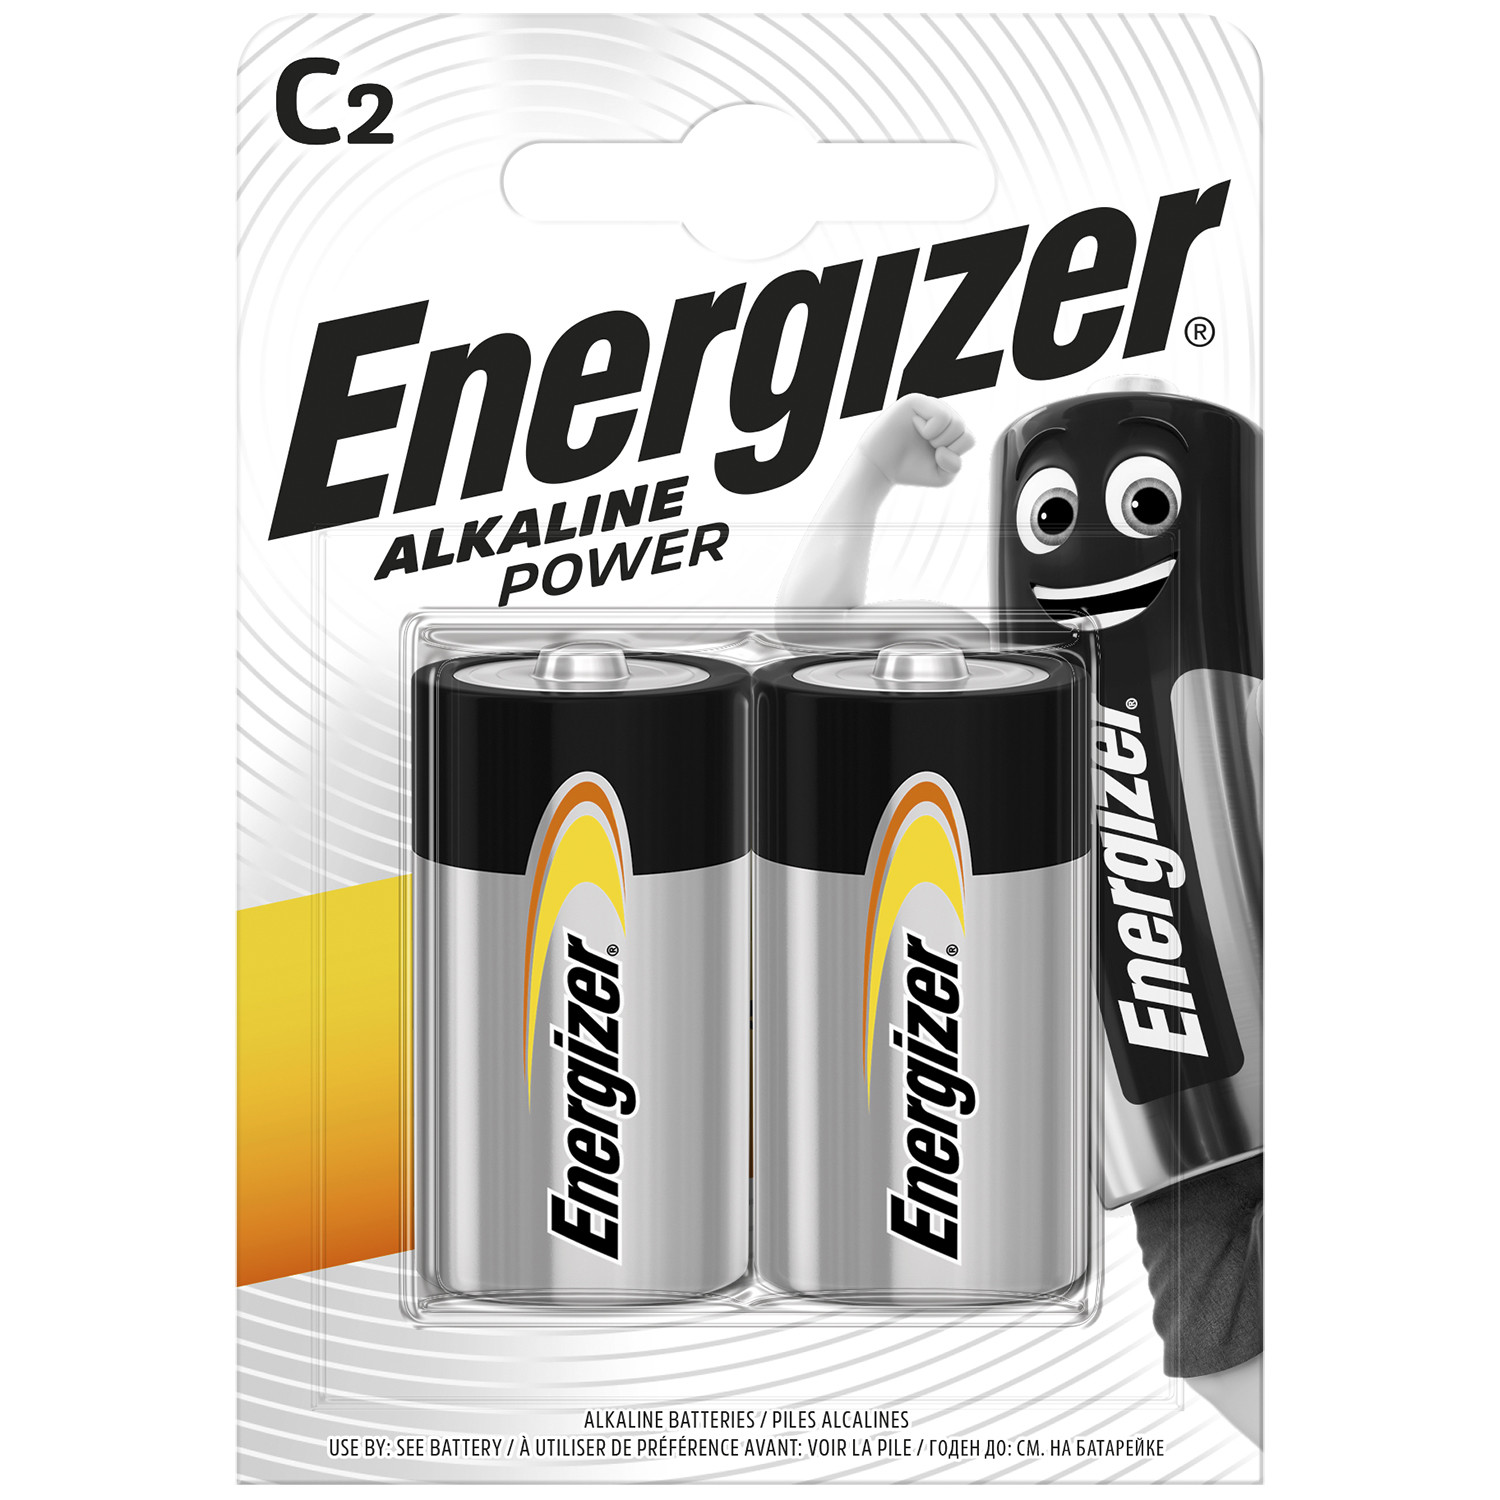 Energizer 2 Pack Alkaline Power C Batteries Image